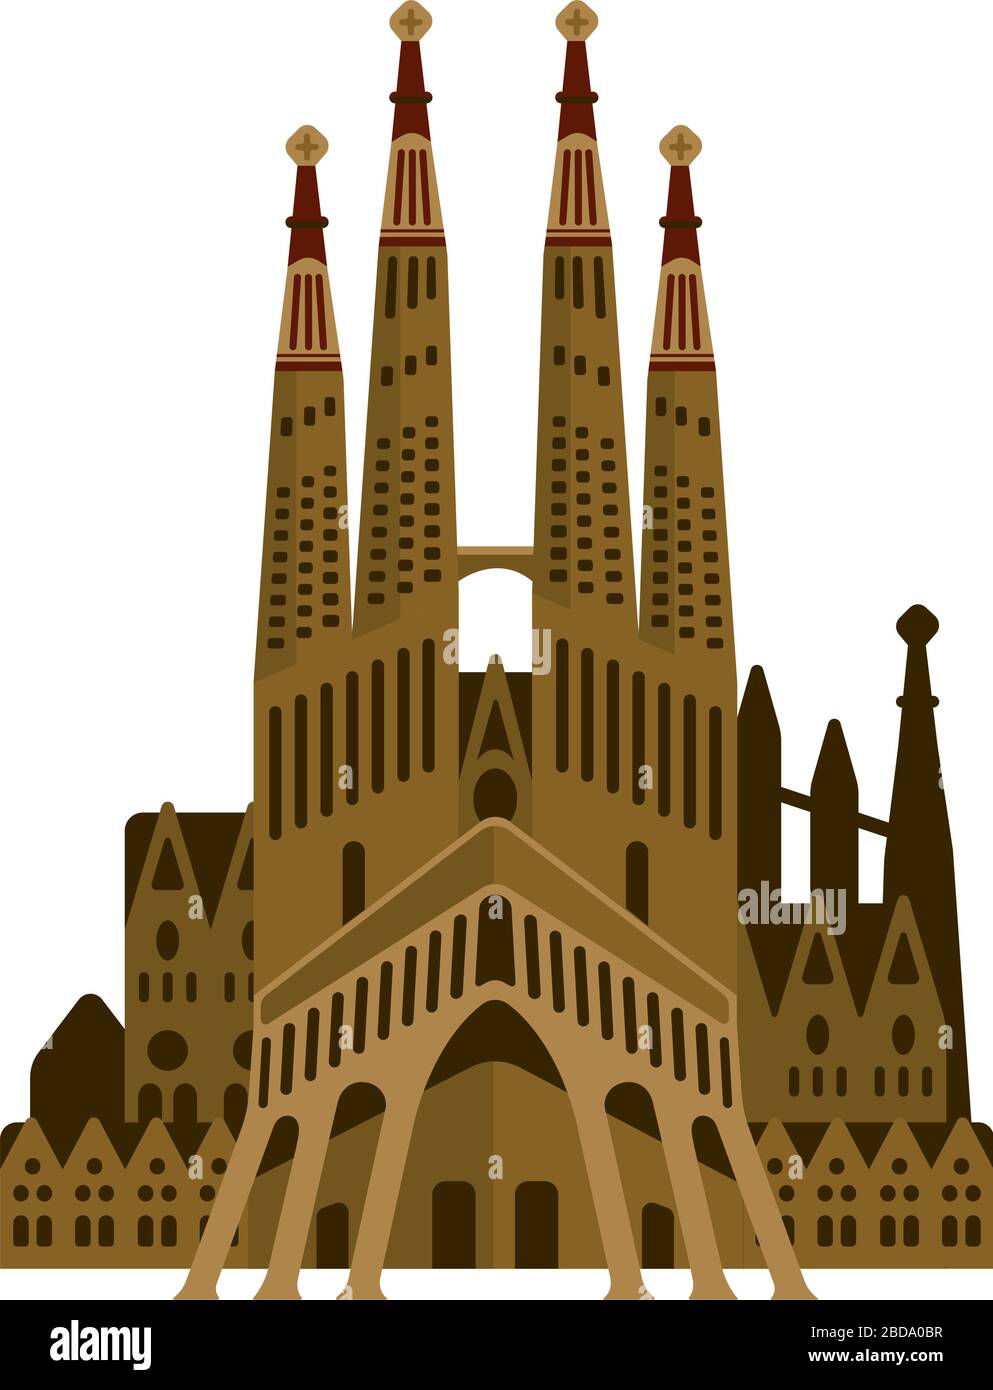 Sagrada Familia - Spain / World famous buildings vector illustration. Stock Vector